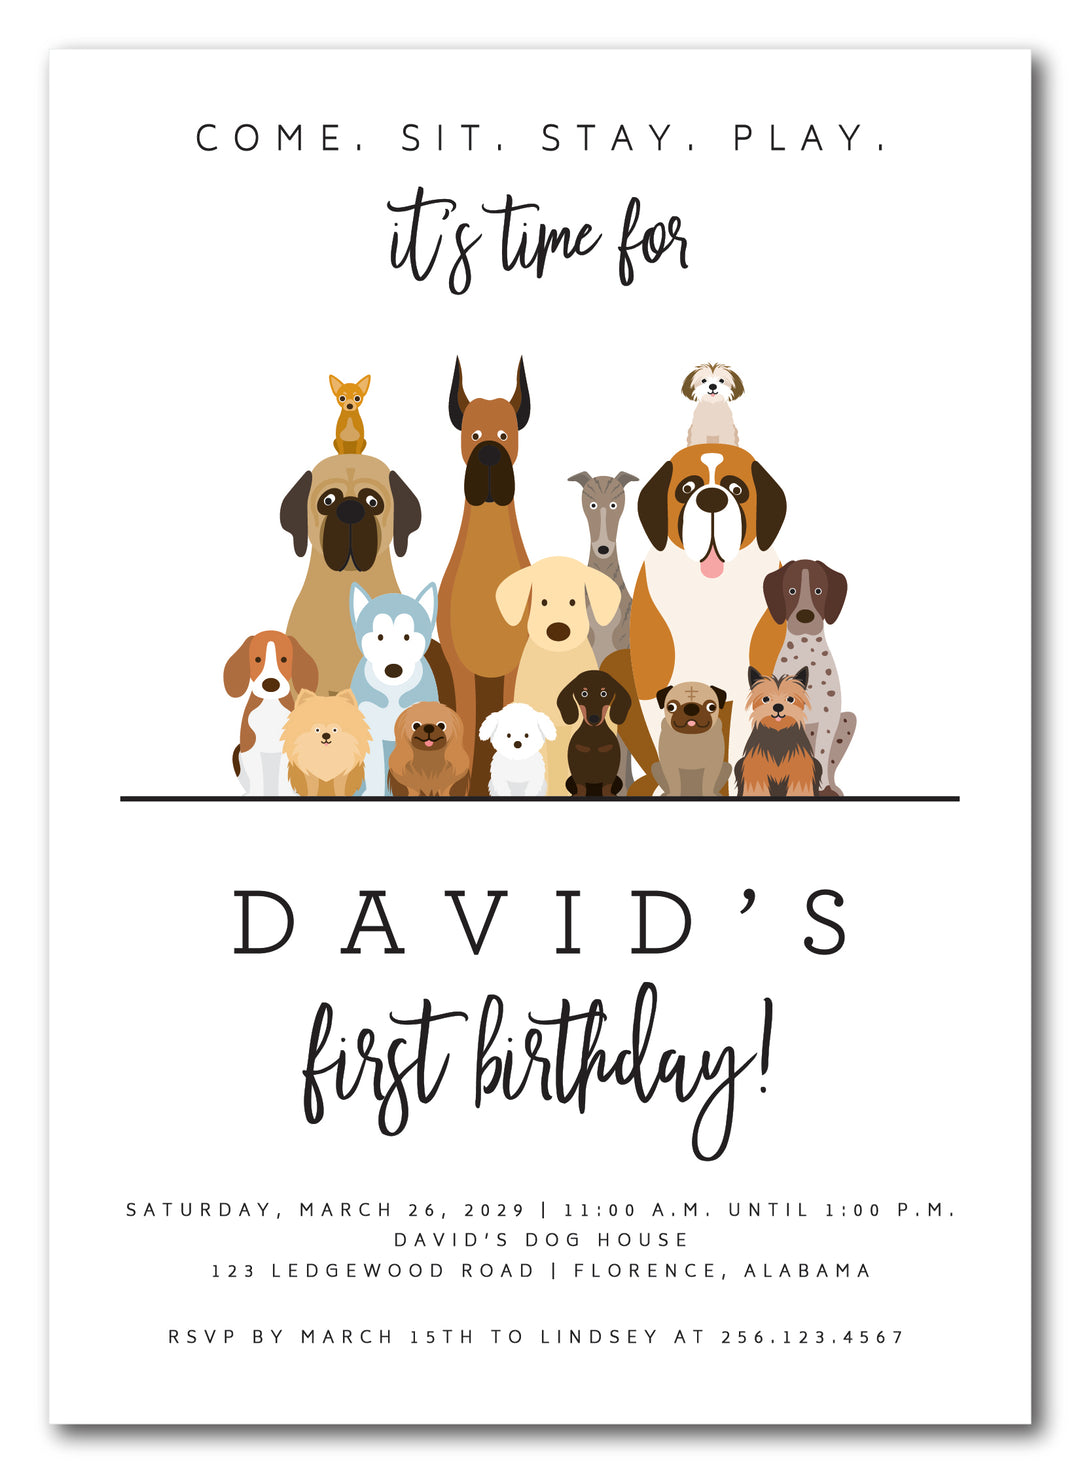 The Dog III Birthday Party Invitation